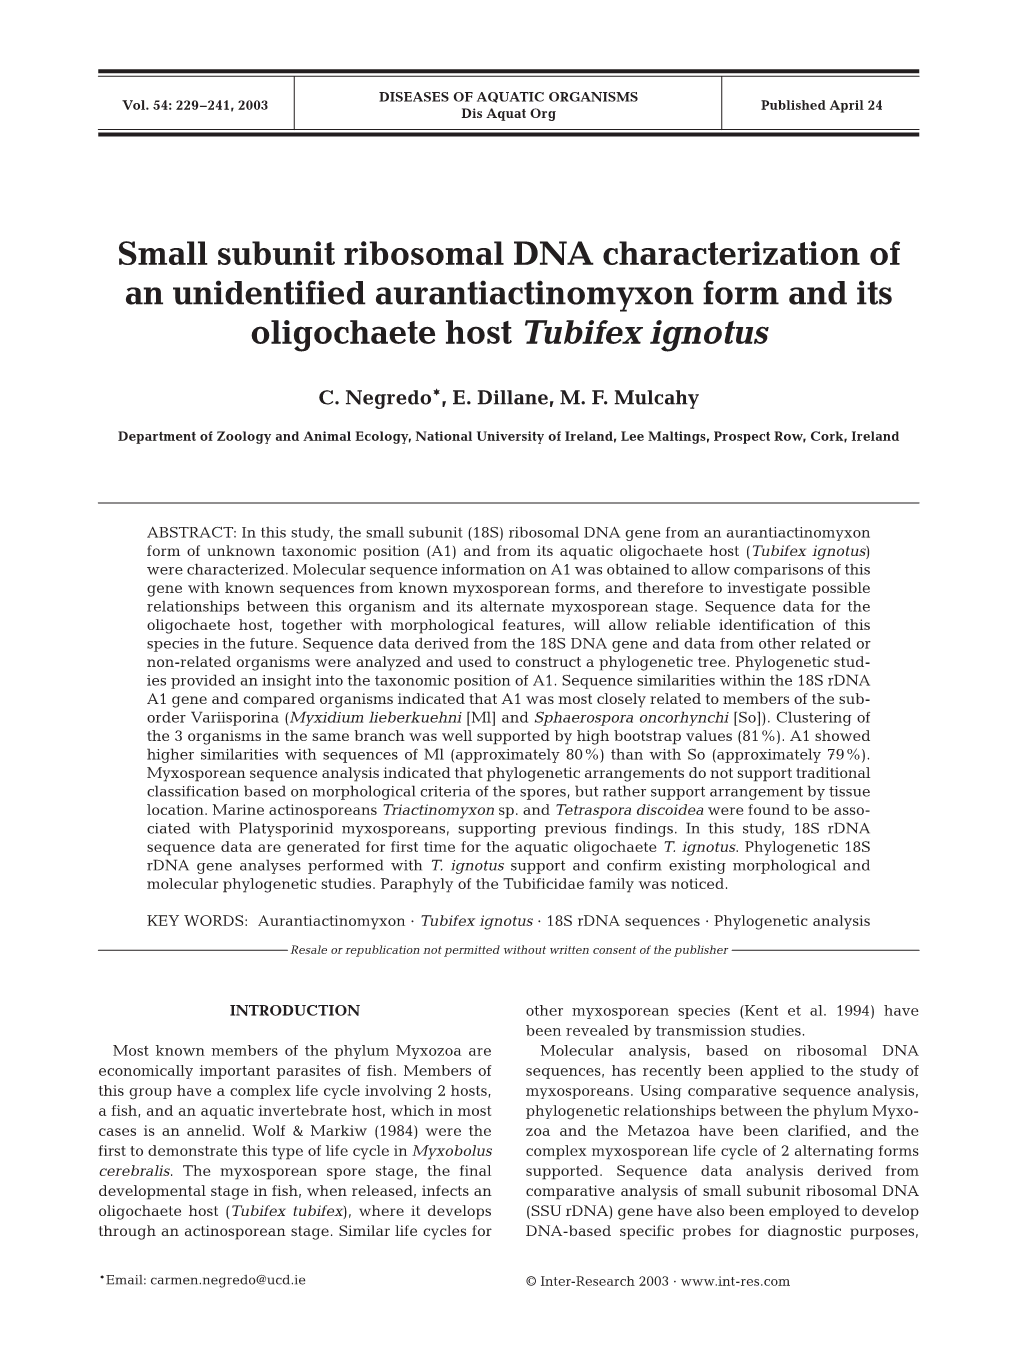 Small Subunit Ribosomal DNA Characterization of an Unidentified Aurantiactinomyxon Form and Its Oligochaete Host Tubifex Ignotus